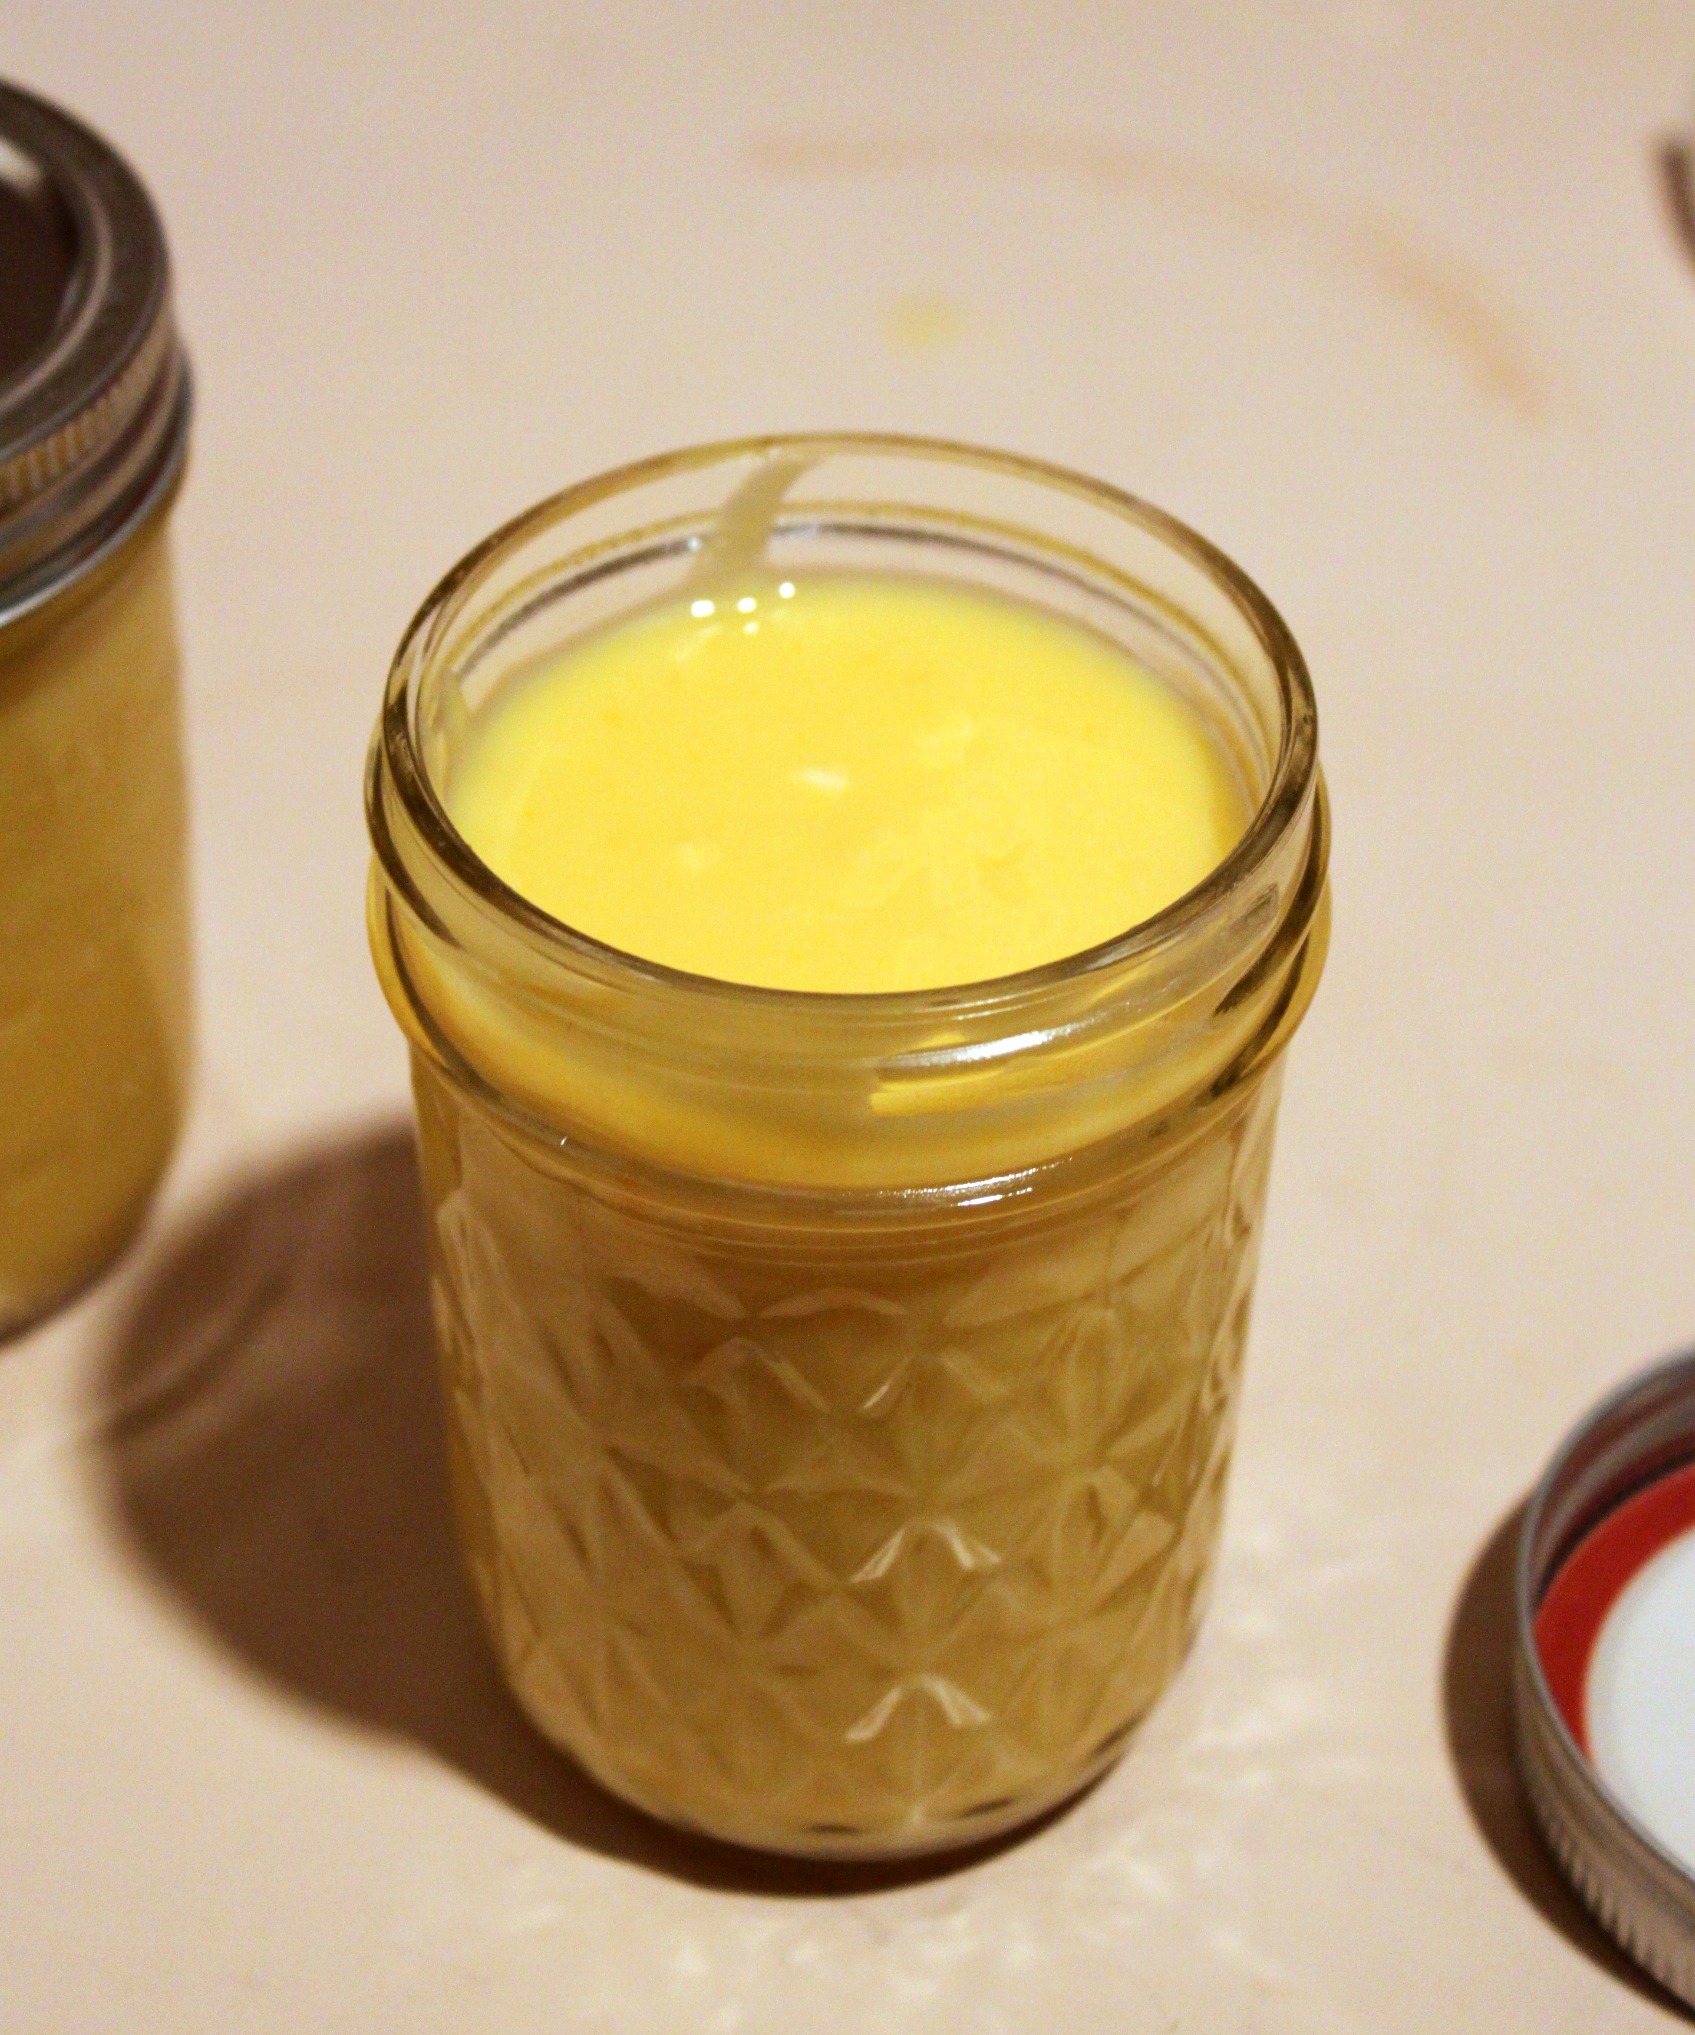 Fill jars with lemon curd